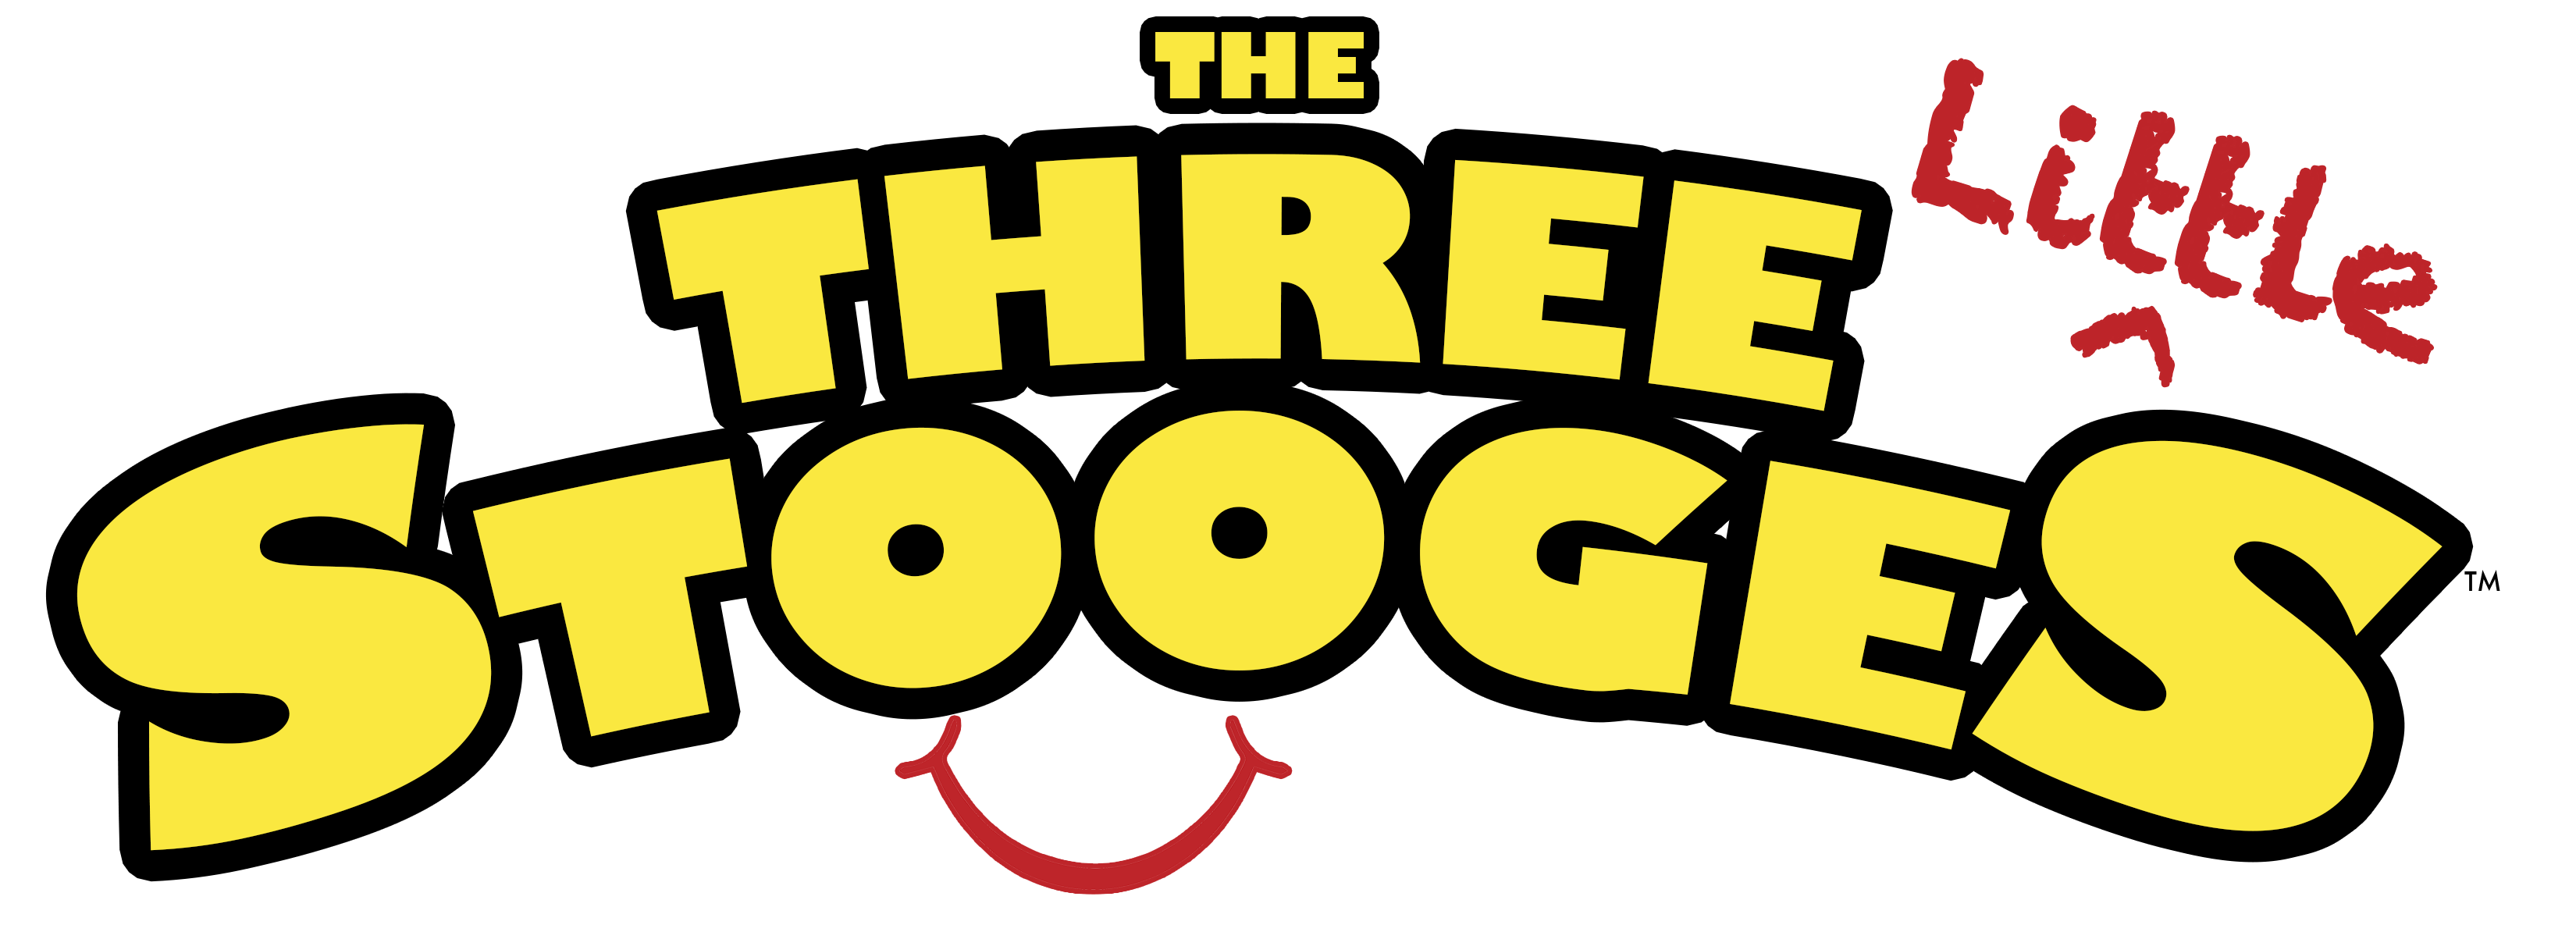 The Three Little Stooges Movie 